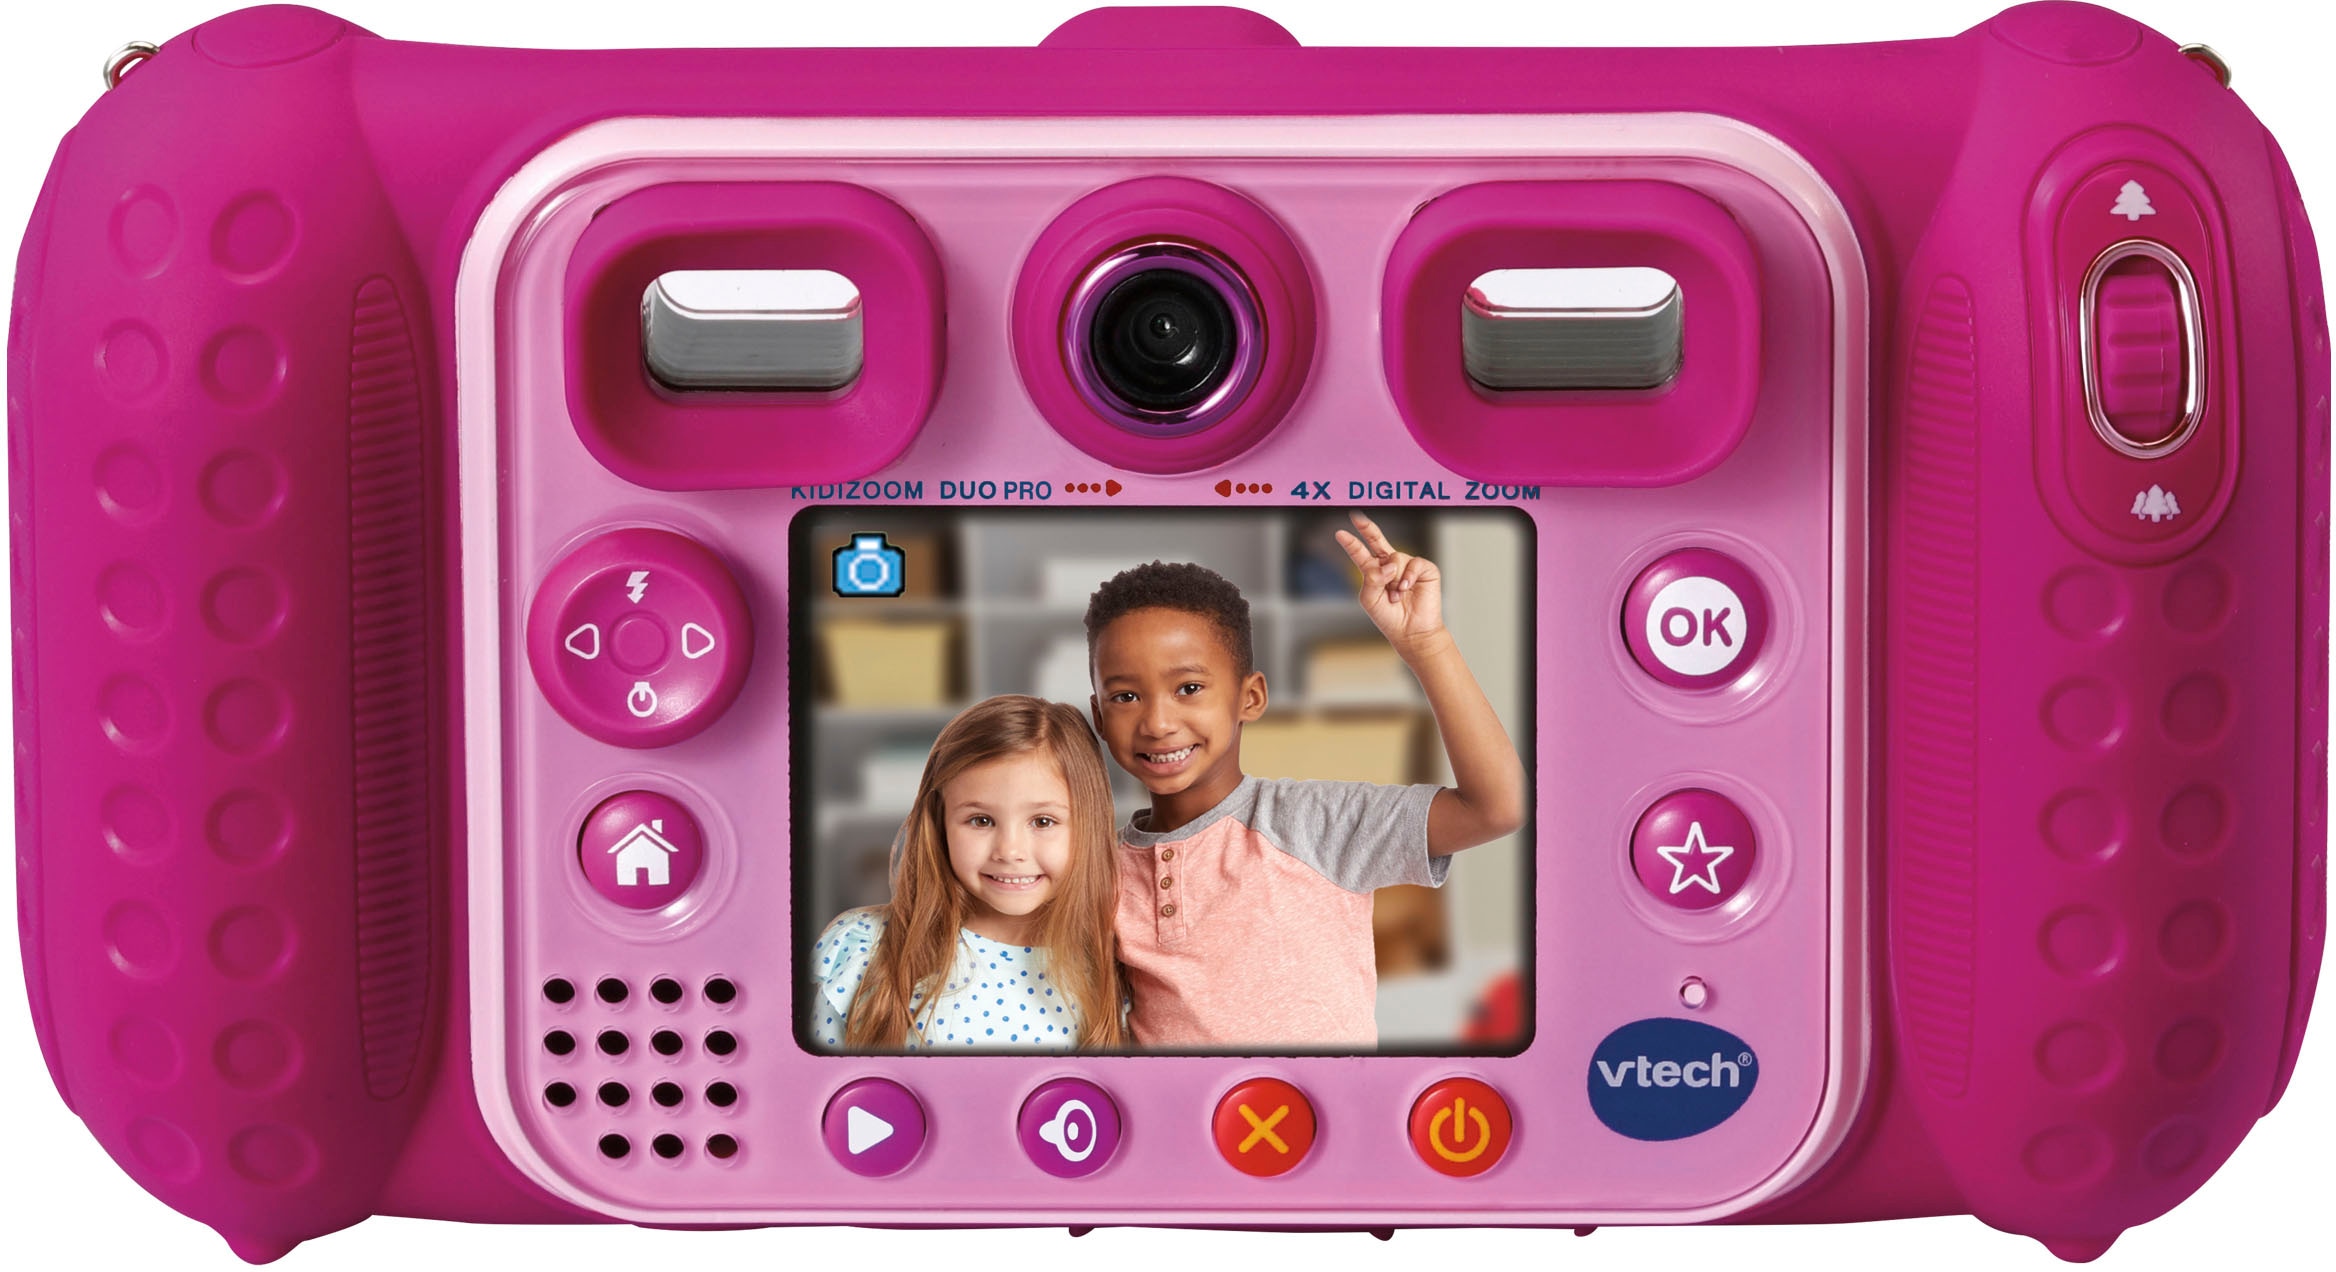 Vtech® Kinderkamera »KidiZoom bei Tragetasche inklusive Duo Pro, pink«